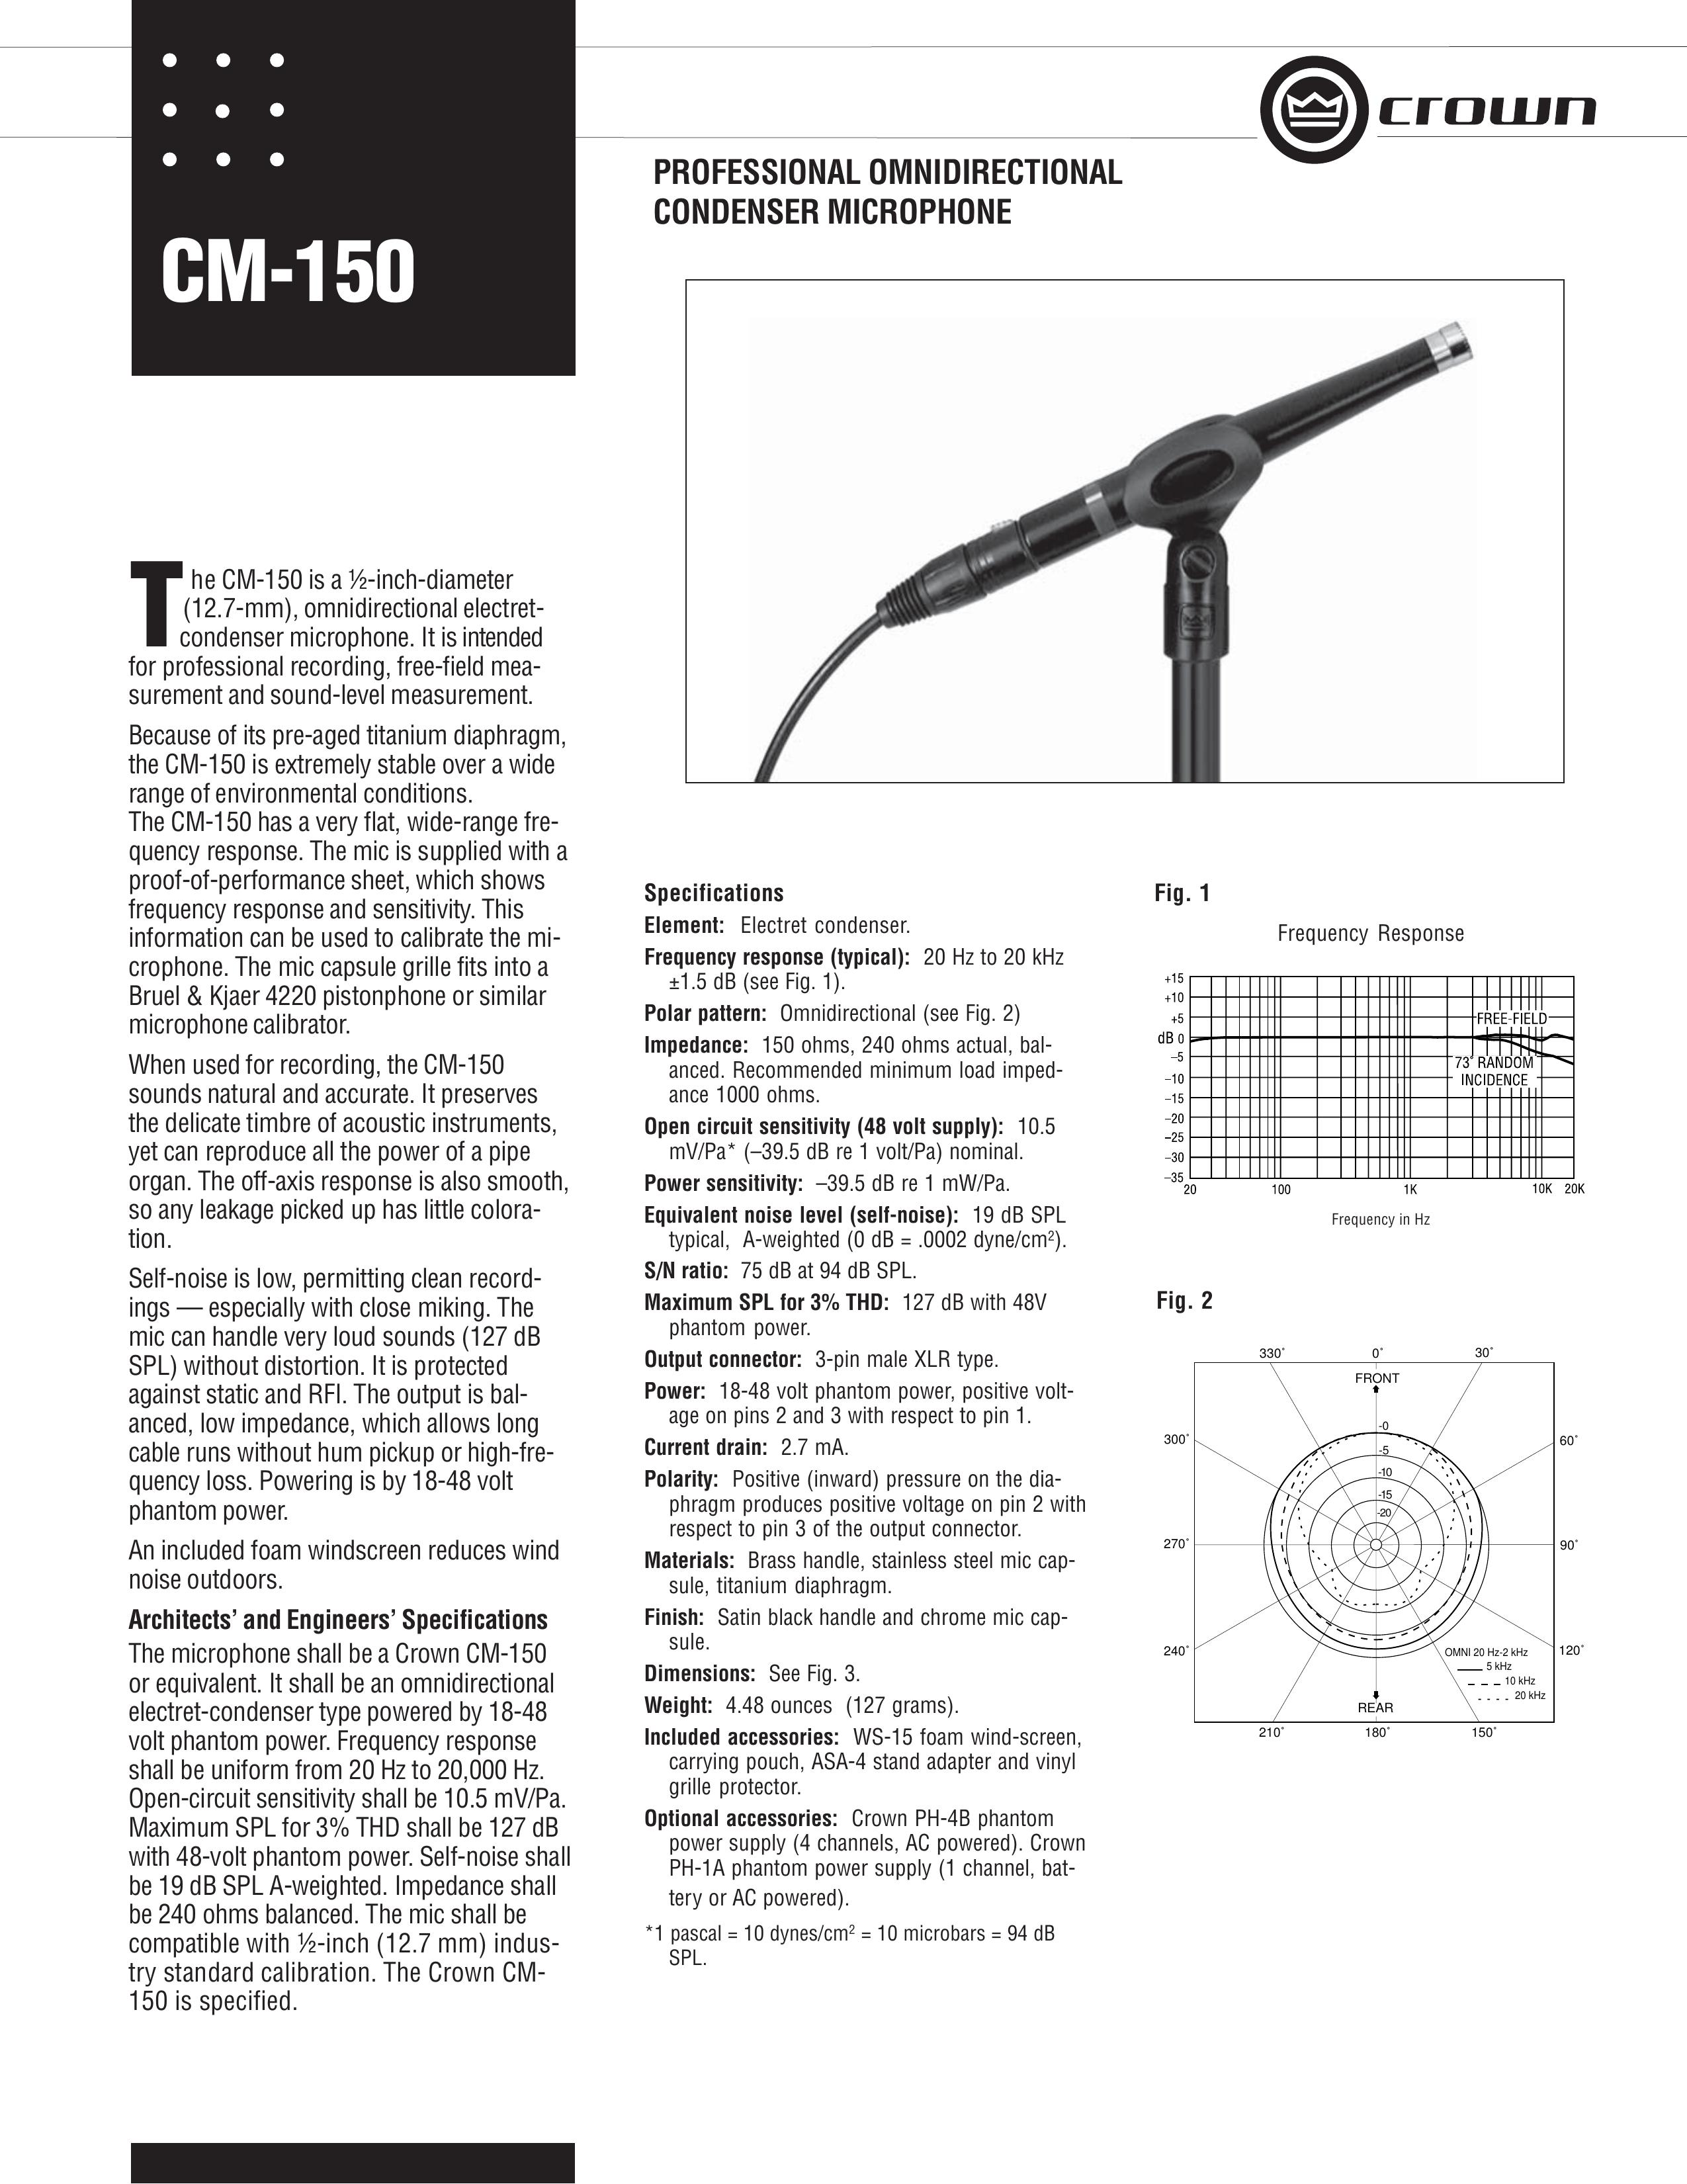 Crown Audio CM-150 Microphone User Manual